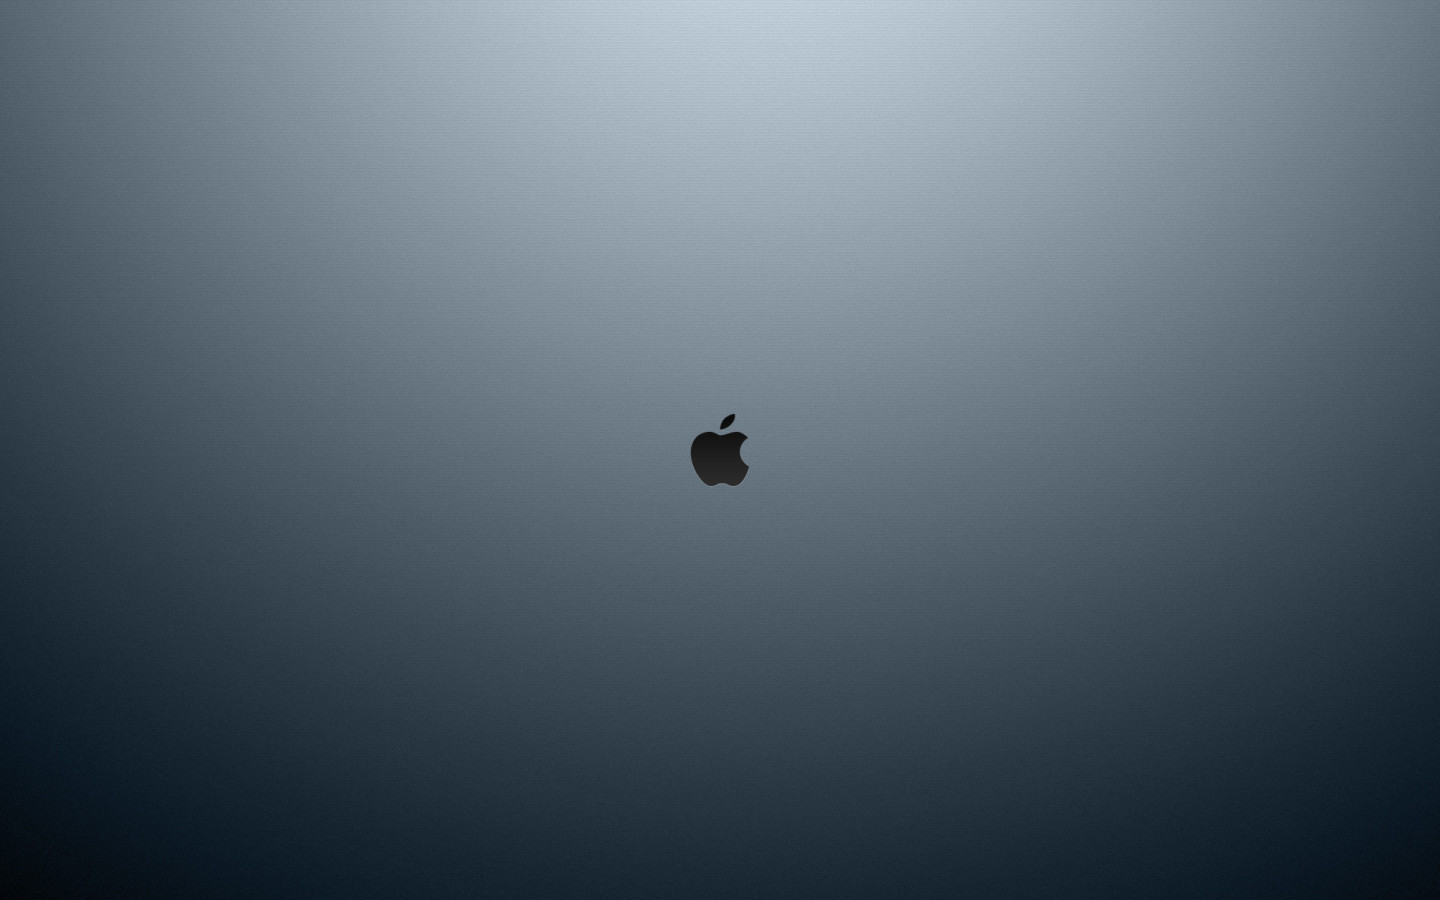 Маленький логотип Apple